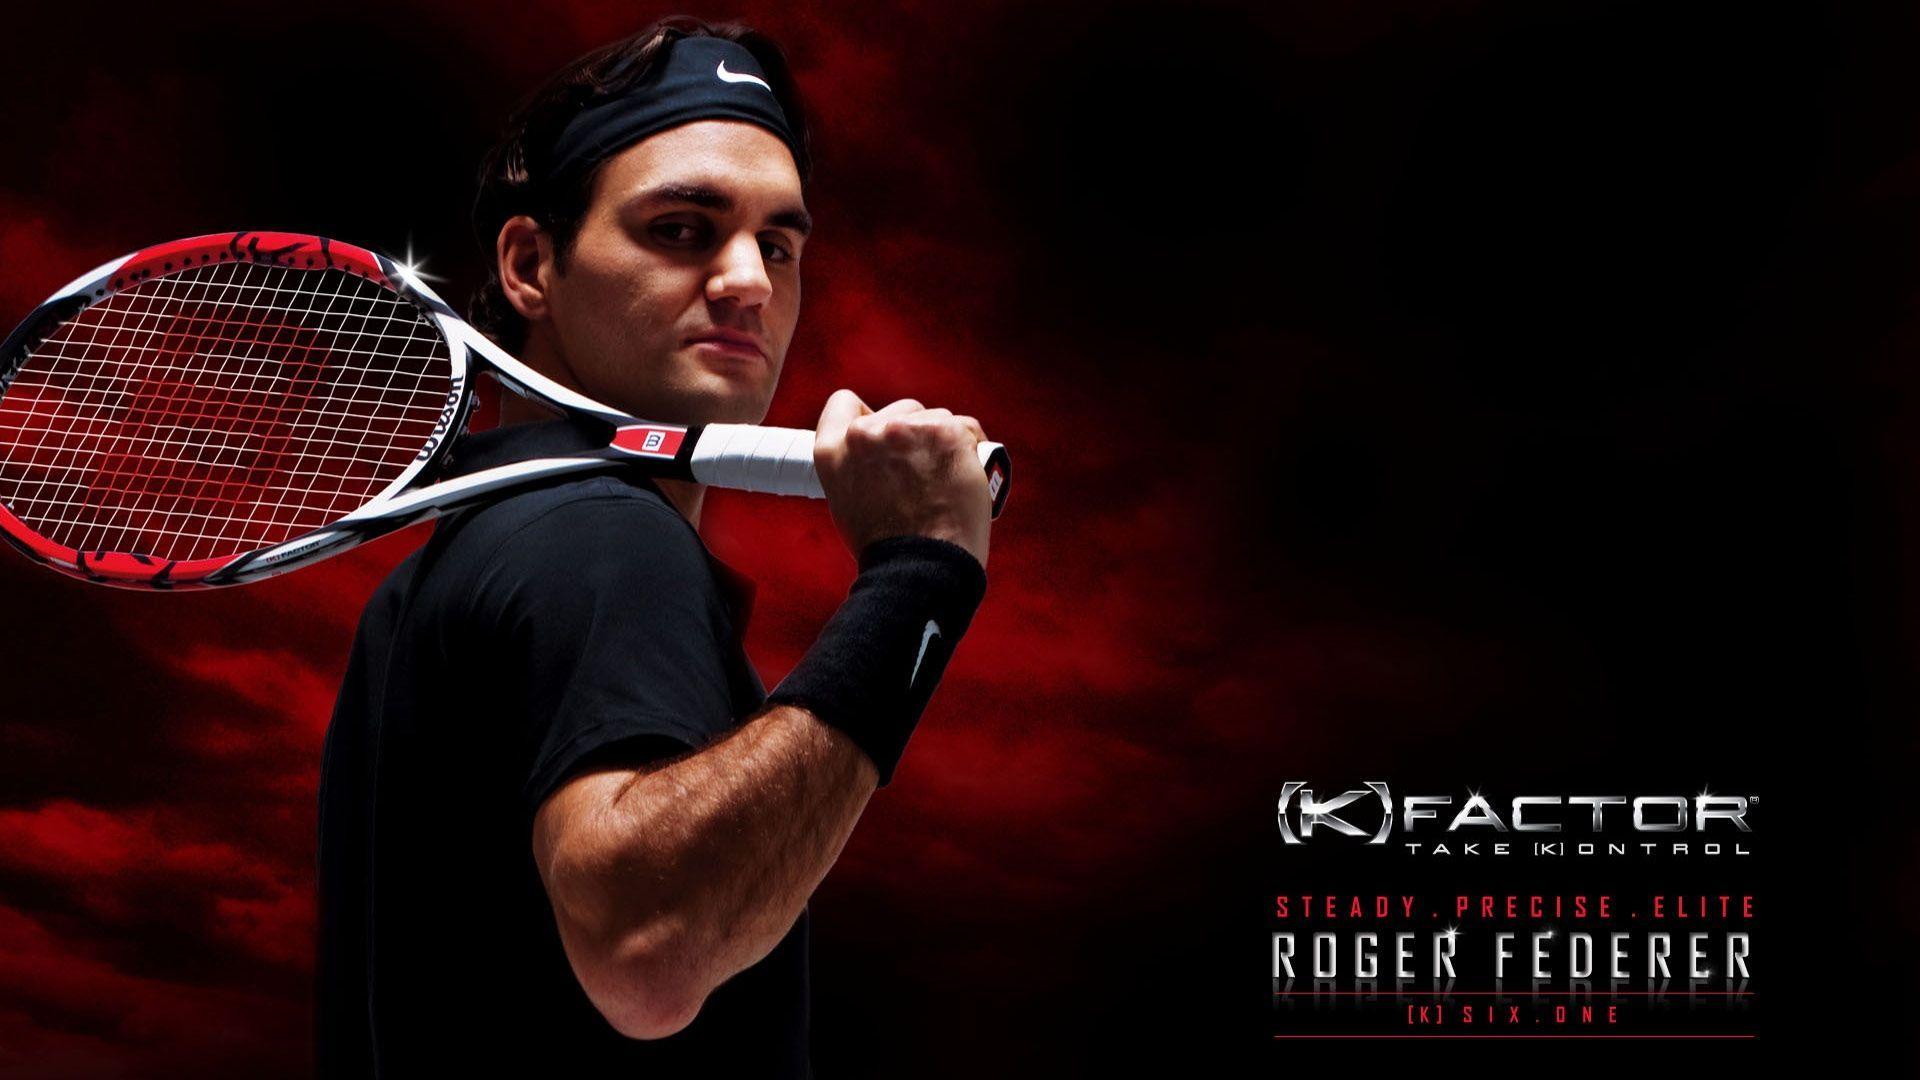 Full HD 1080p Roger federer Wallpaper HD, Desktop Background. Roger federer, Tennis, Tennis players